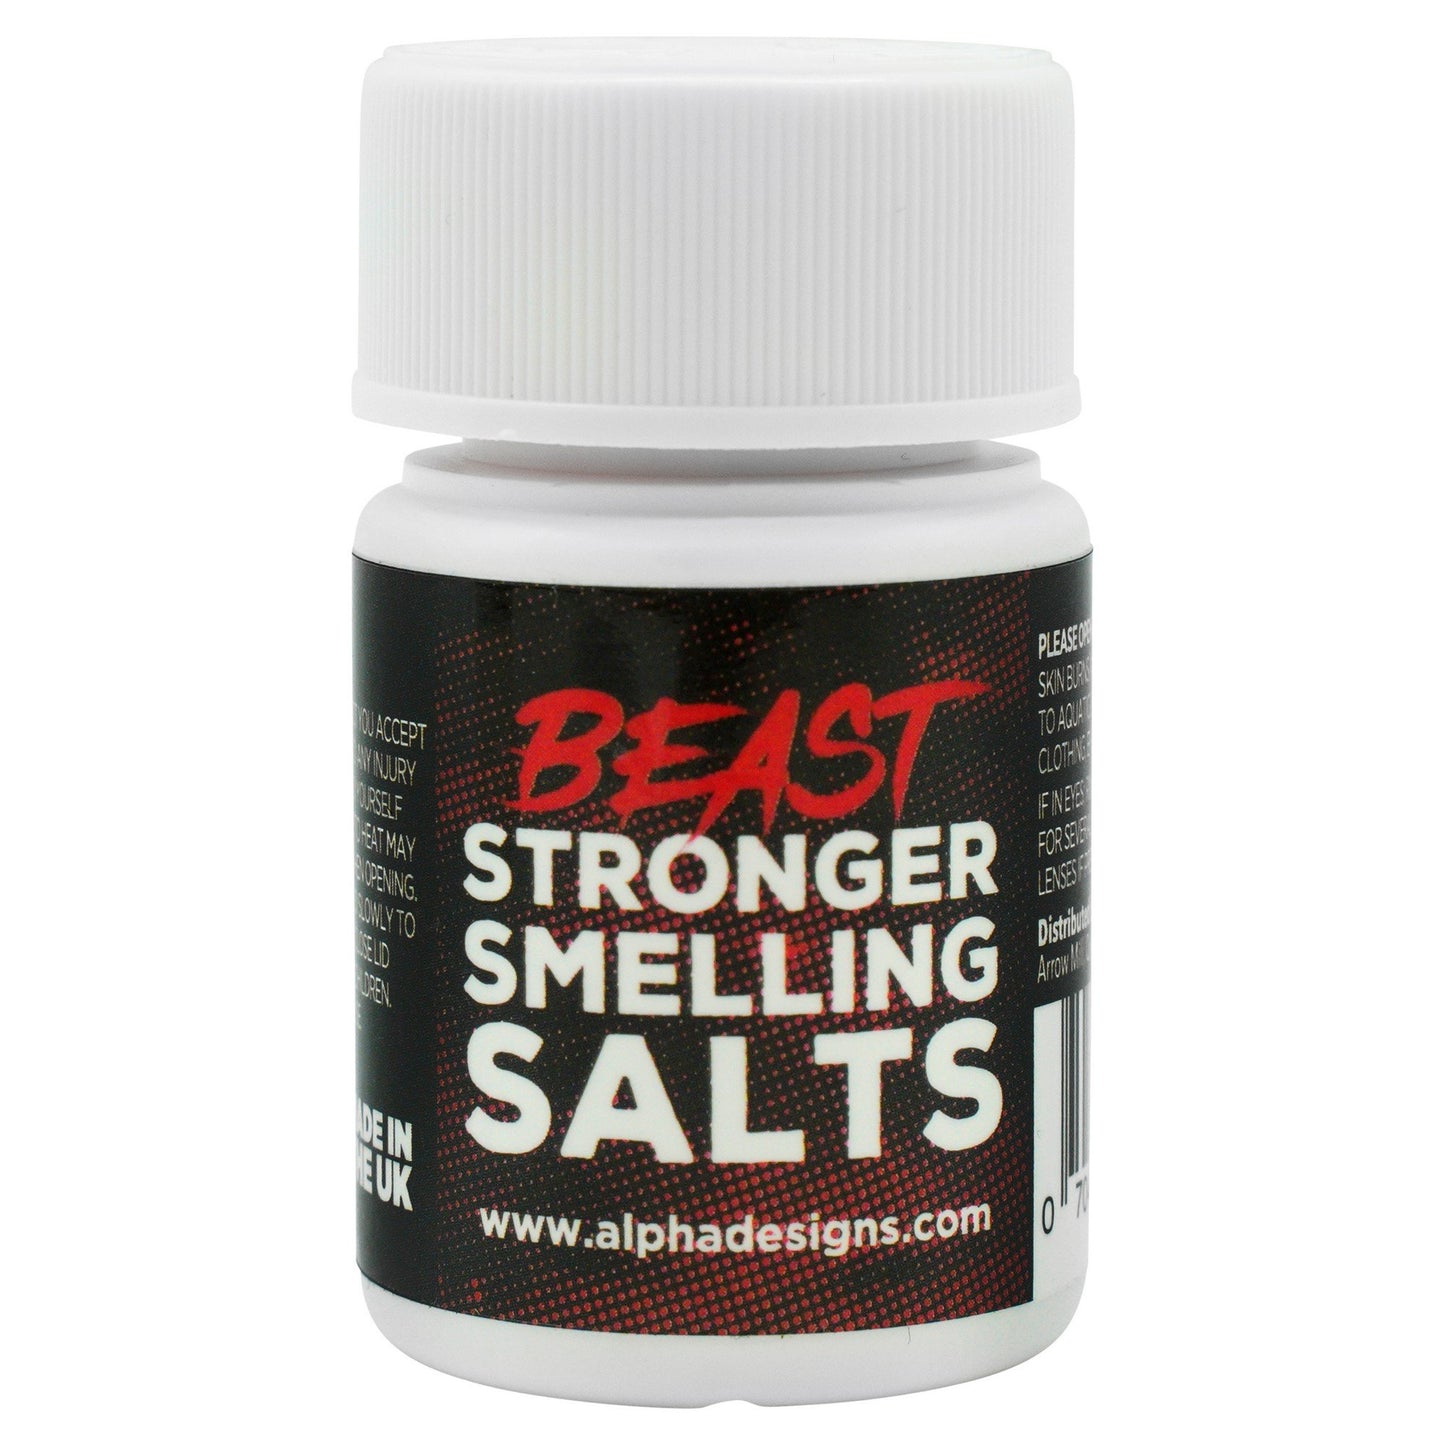 Alpha Designs Beast Stronger Smelling Salts